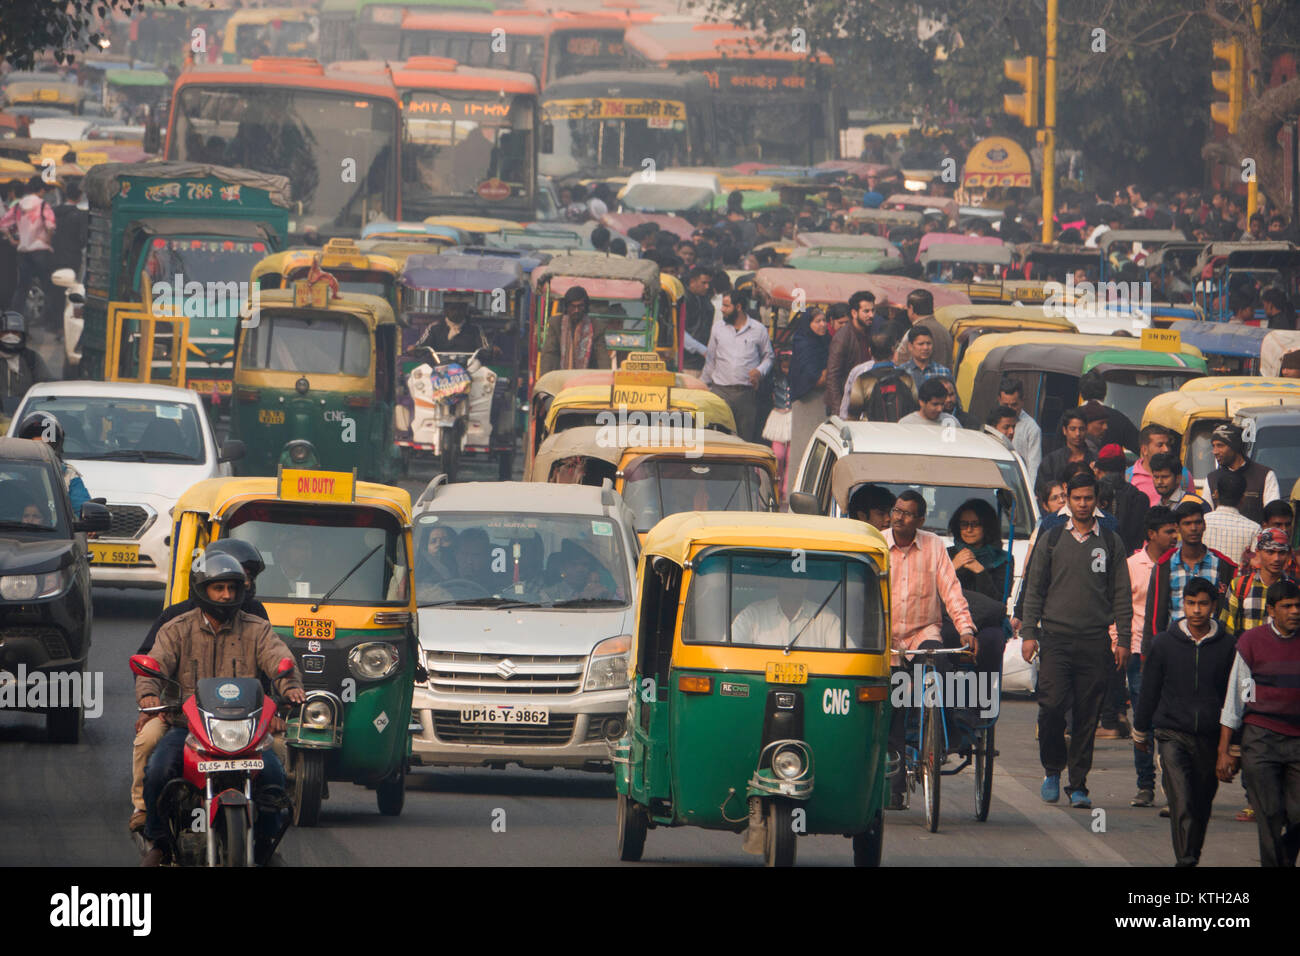 Busy traffic street scene in New Delhi, India Stock Photo